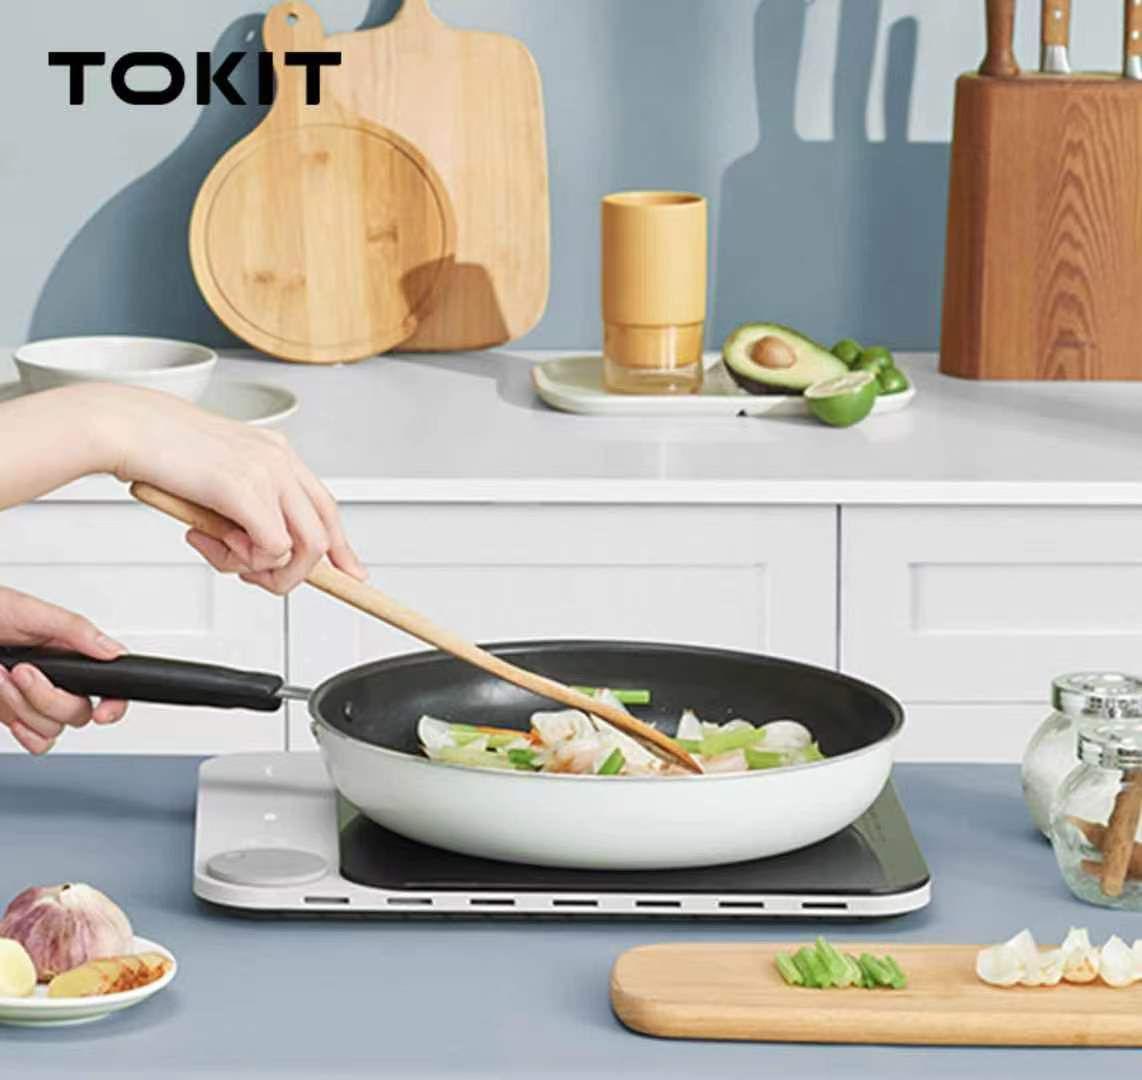 جهاز طبخ من شاومي Xiaomi TOKIT Induction Cooker - cG9zdDo1MzI3NjA=